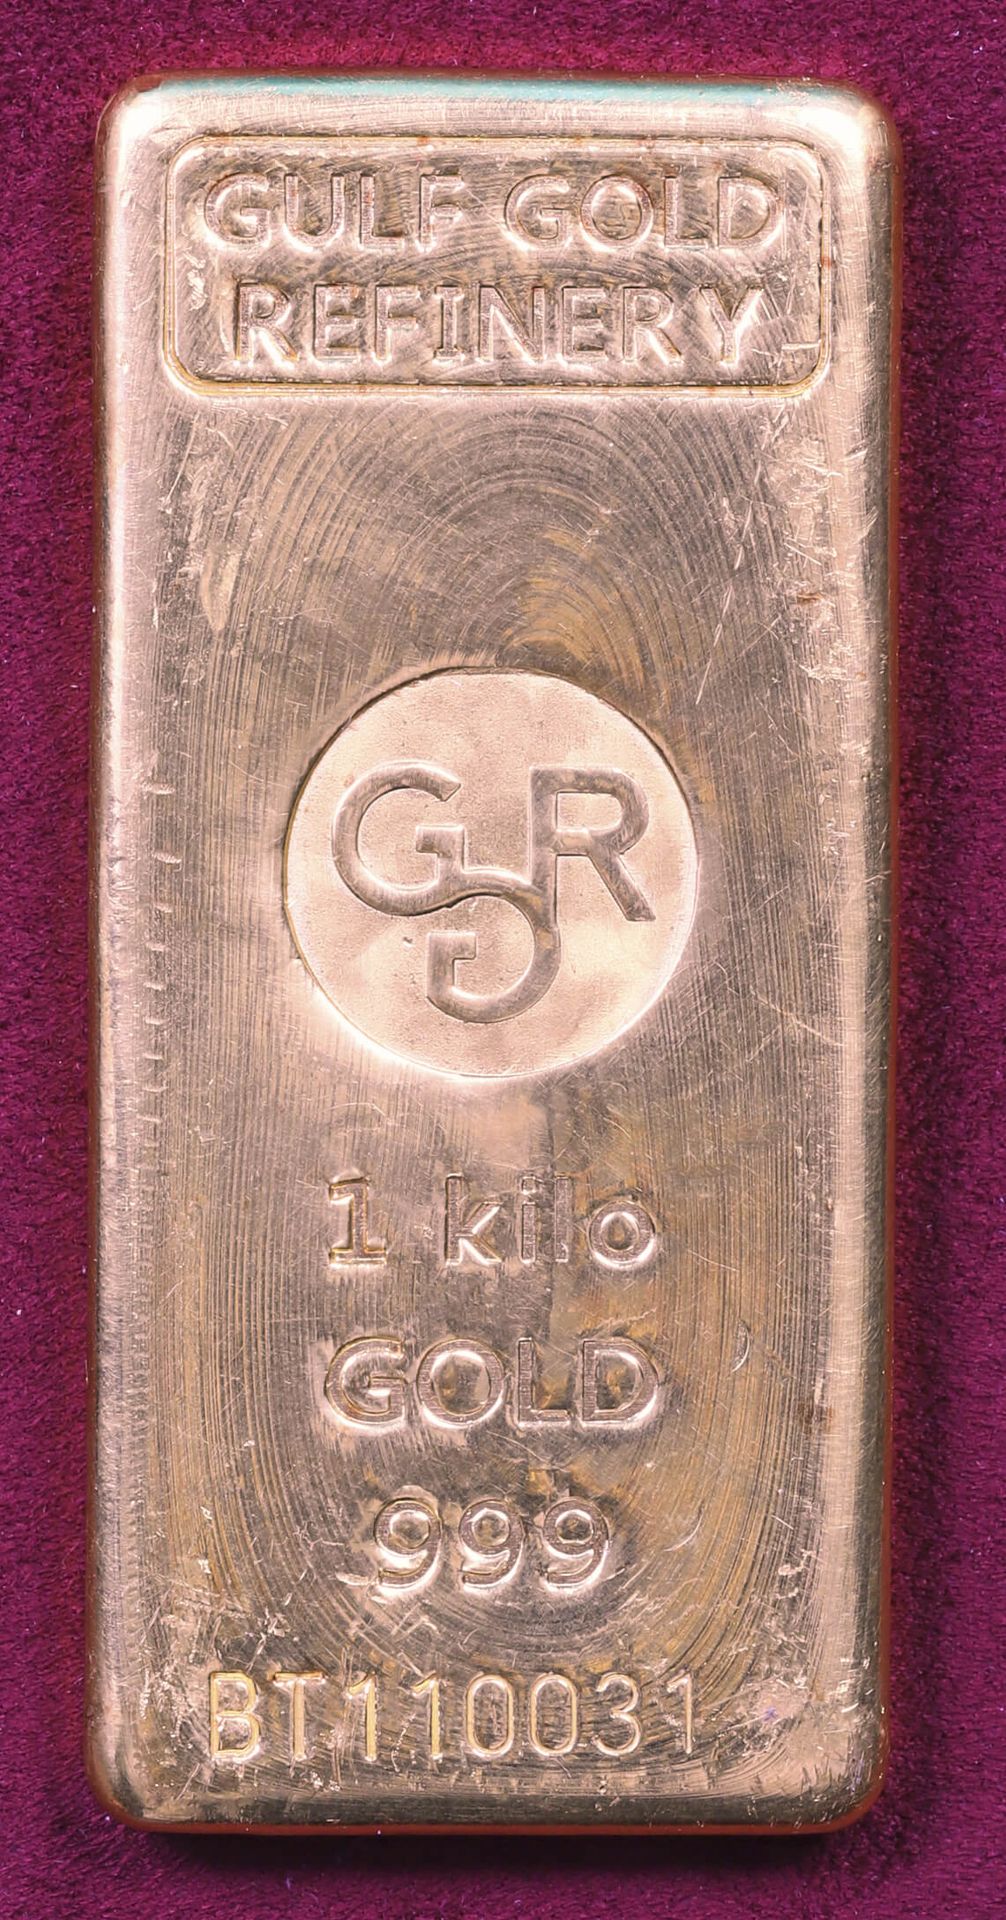 Null Lingot En or (999‰)

Gulf gold refinery

Numéroté BT110031

Poids 998 g 

A&hellip;